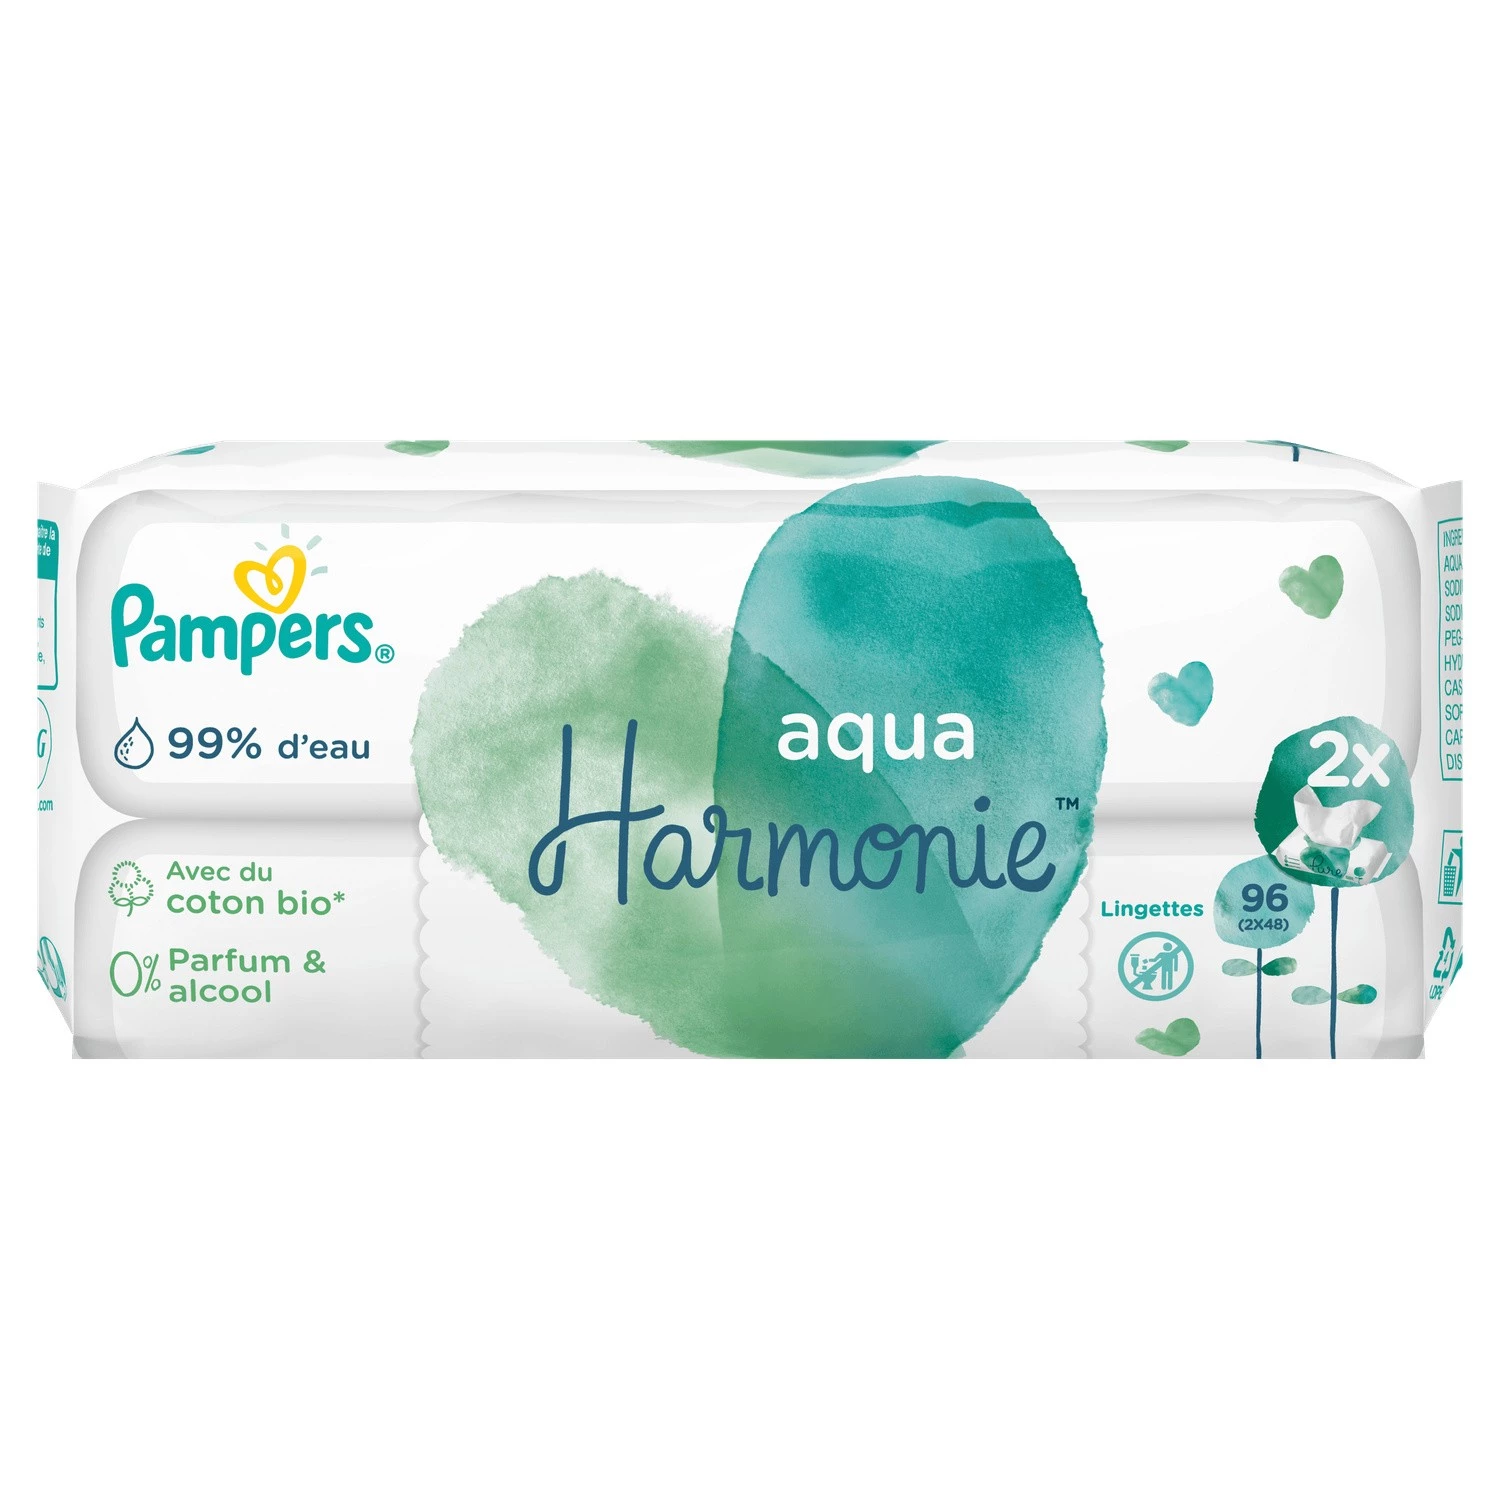 Lingettes aqua harmonie 2x48 - PAMPERS